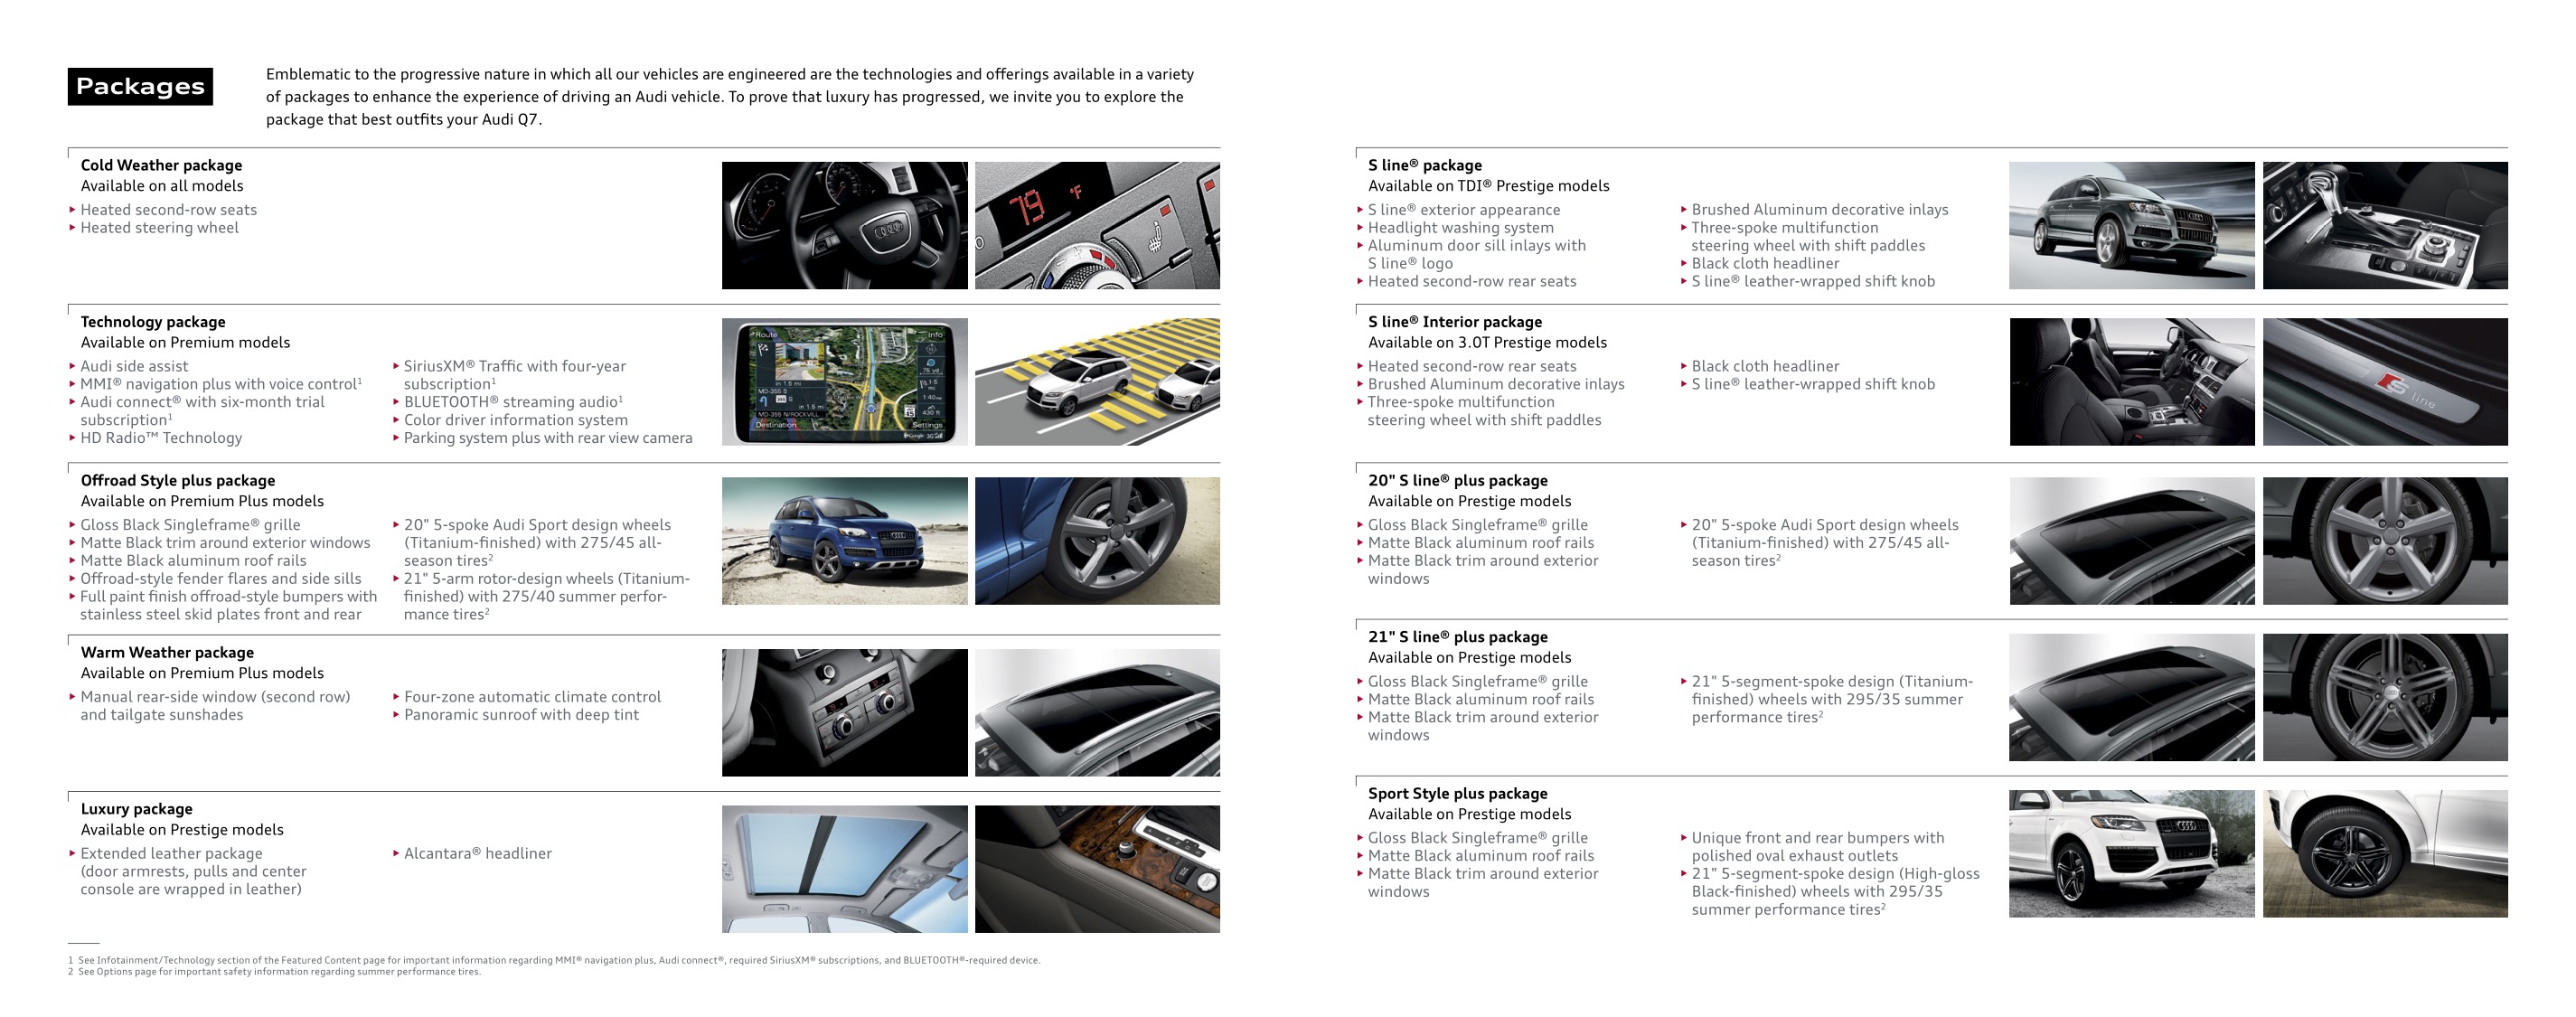 2015 Audi Q7 Brochure Page 9